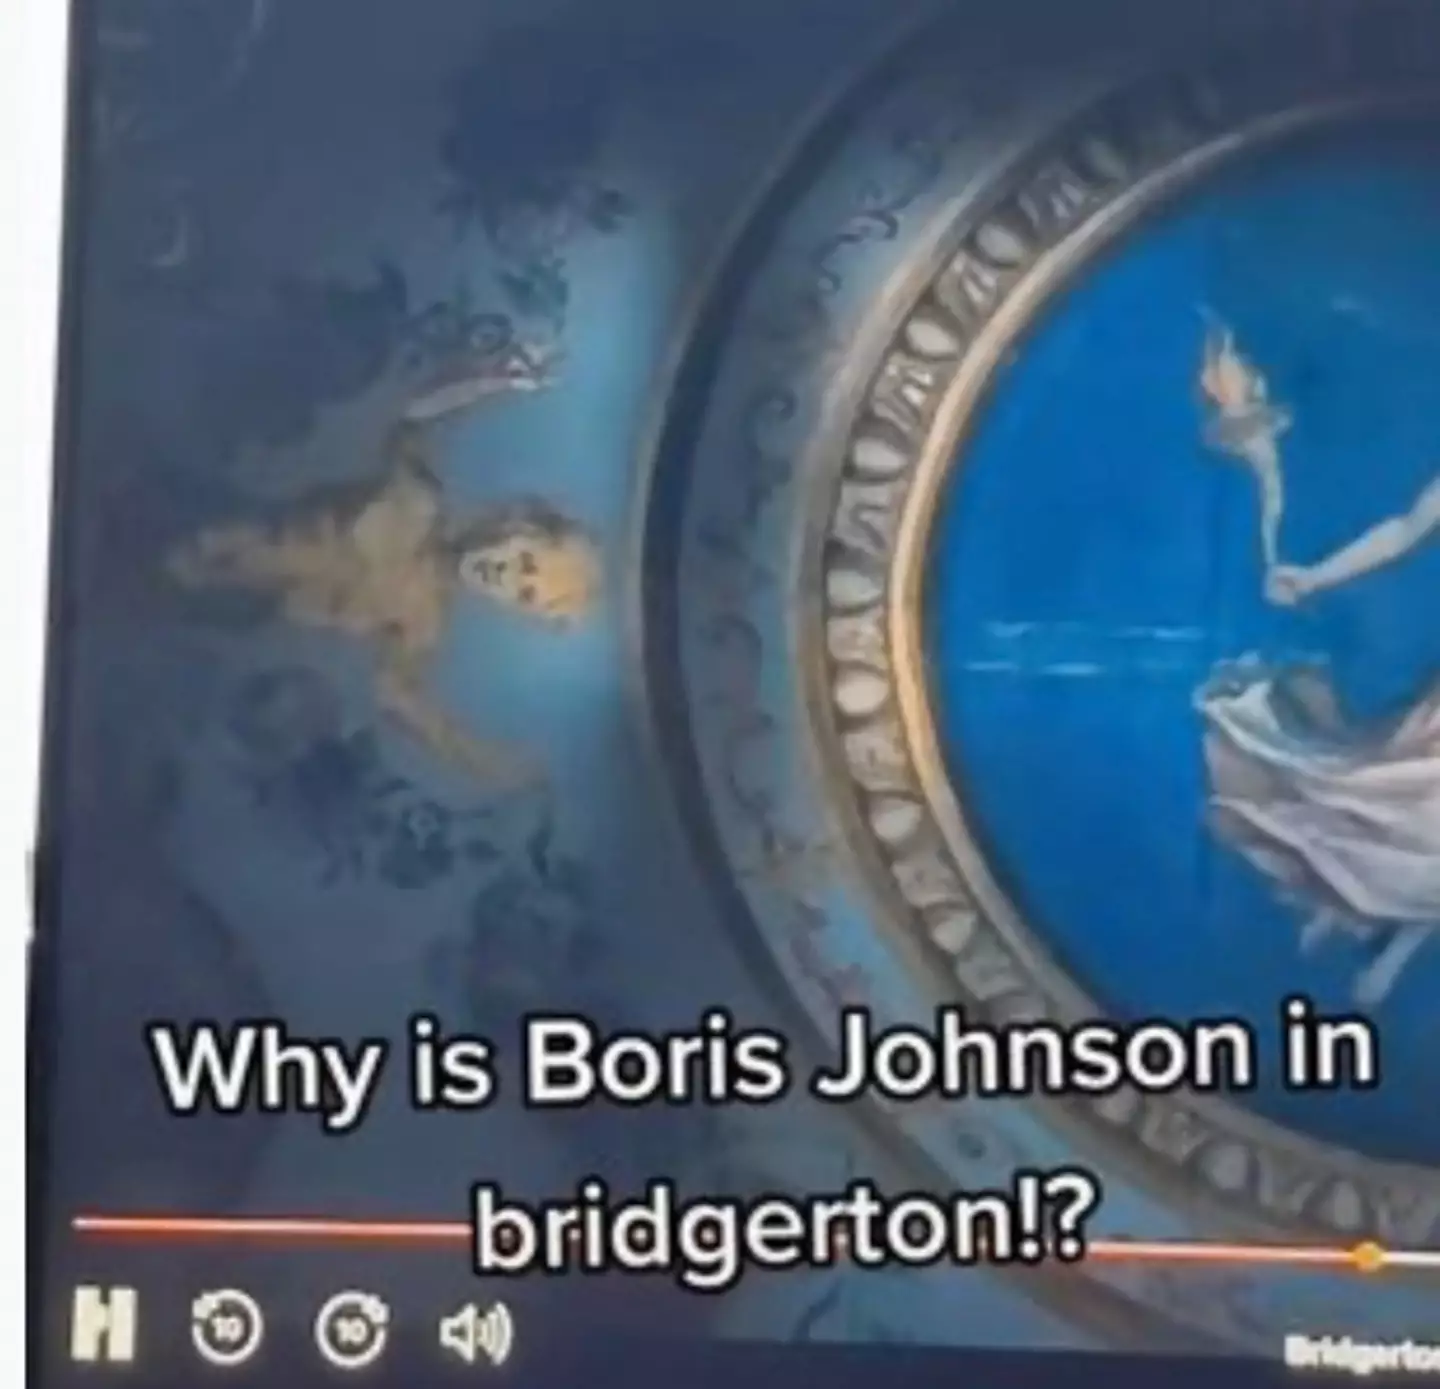 Can you see Boris Johnson?